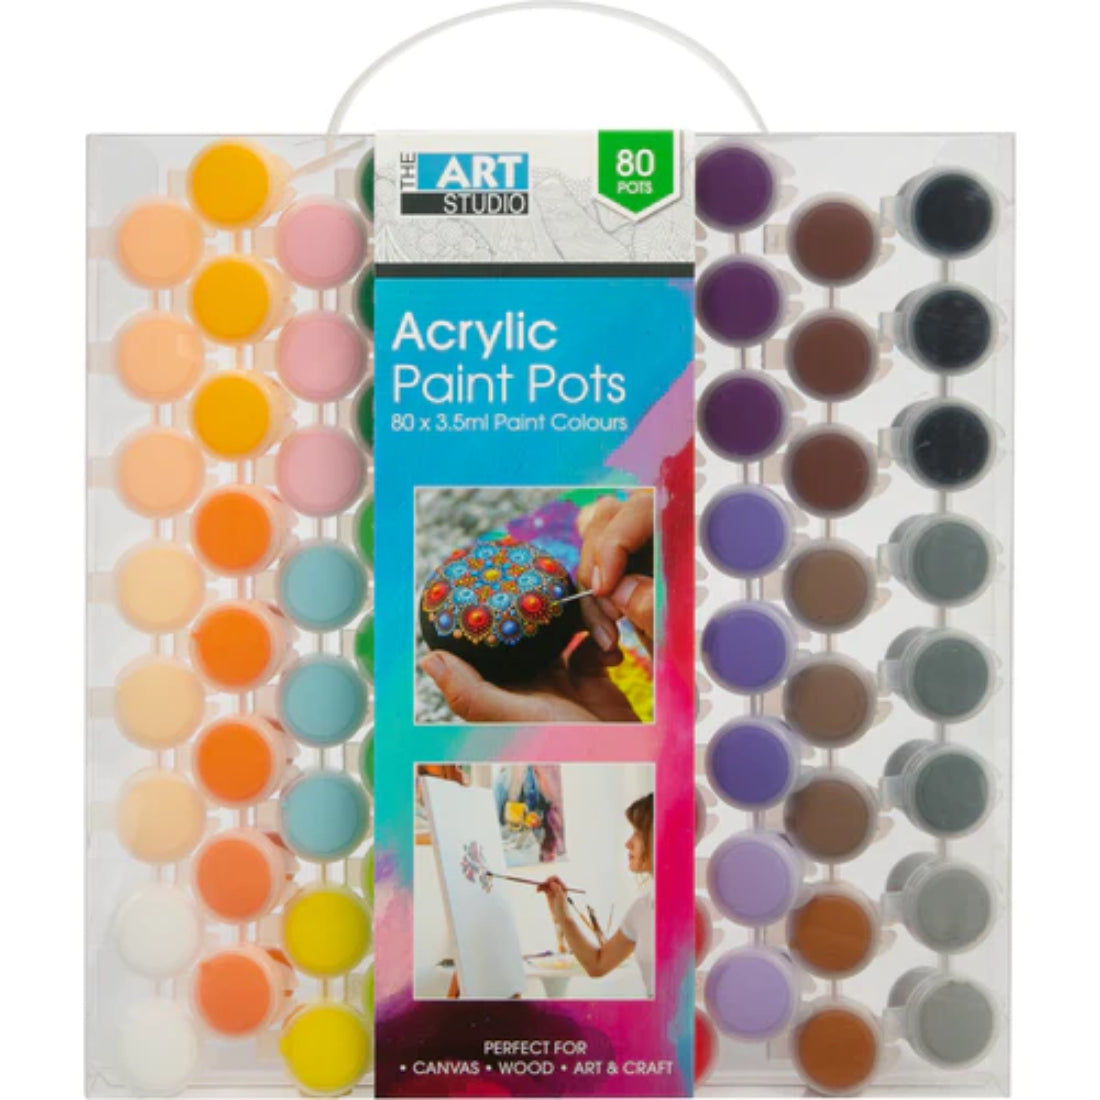 The Art Studio Mini Acrylic Paint Pots 80 Assorted Colours x 3.5ml